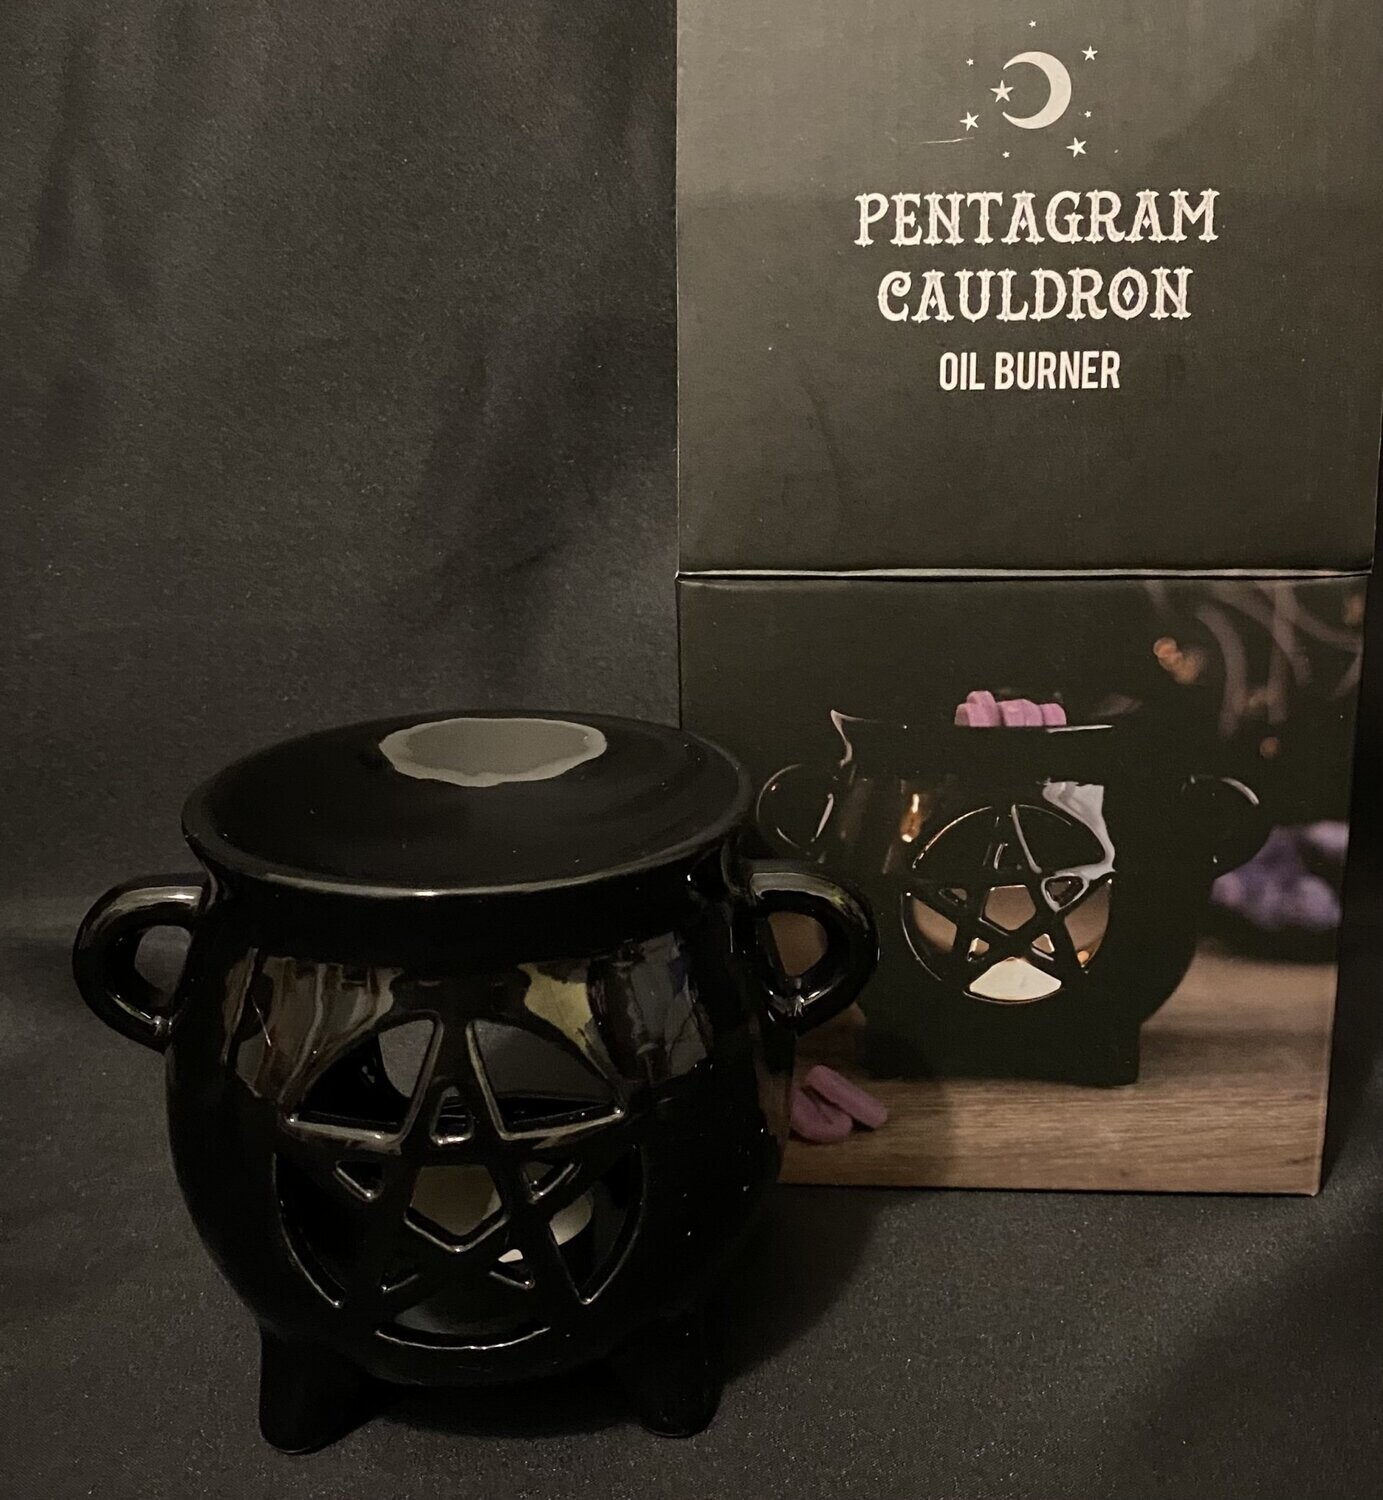 Pentagram Cauldron Ceramic Oil Burner in Box